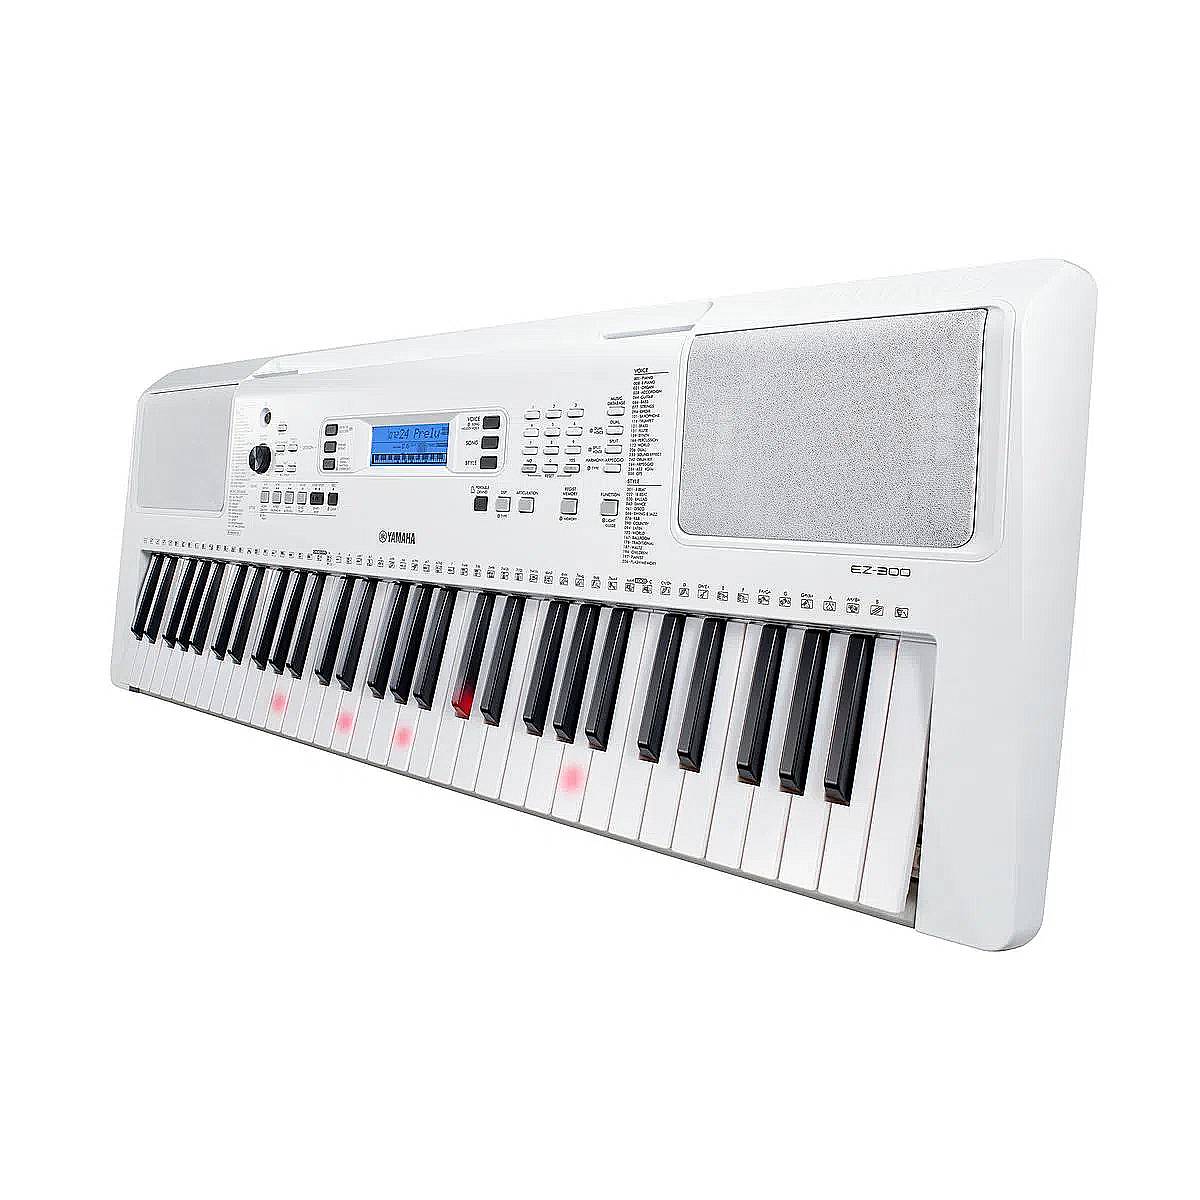 teclado-ez-300-yamaha-2